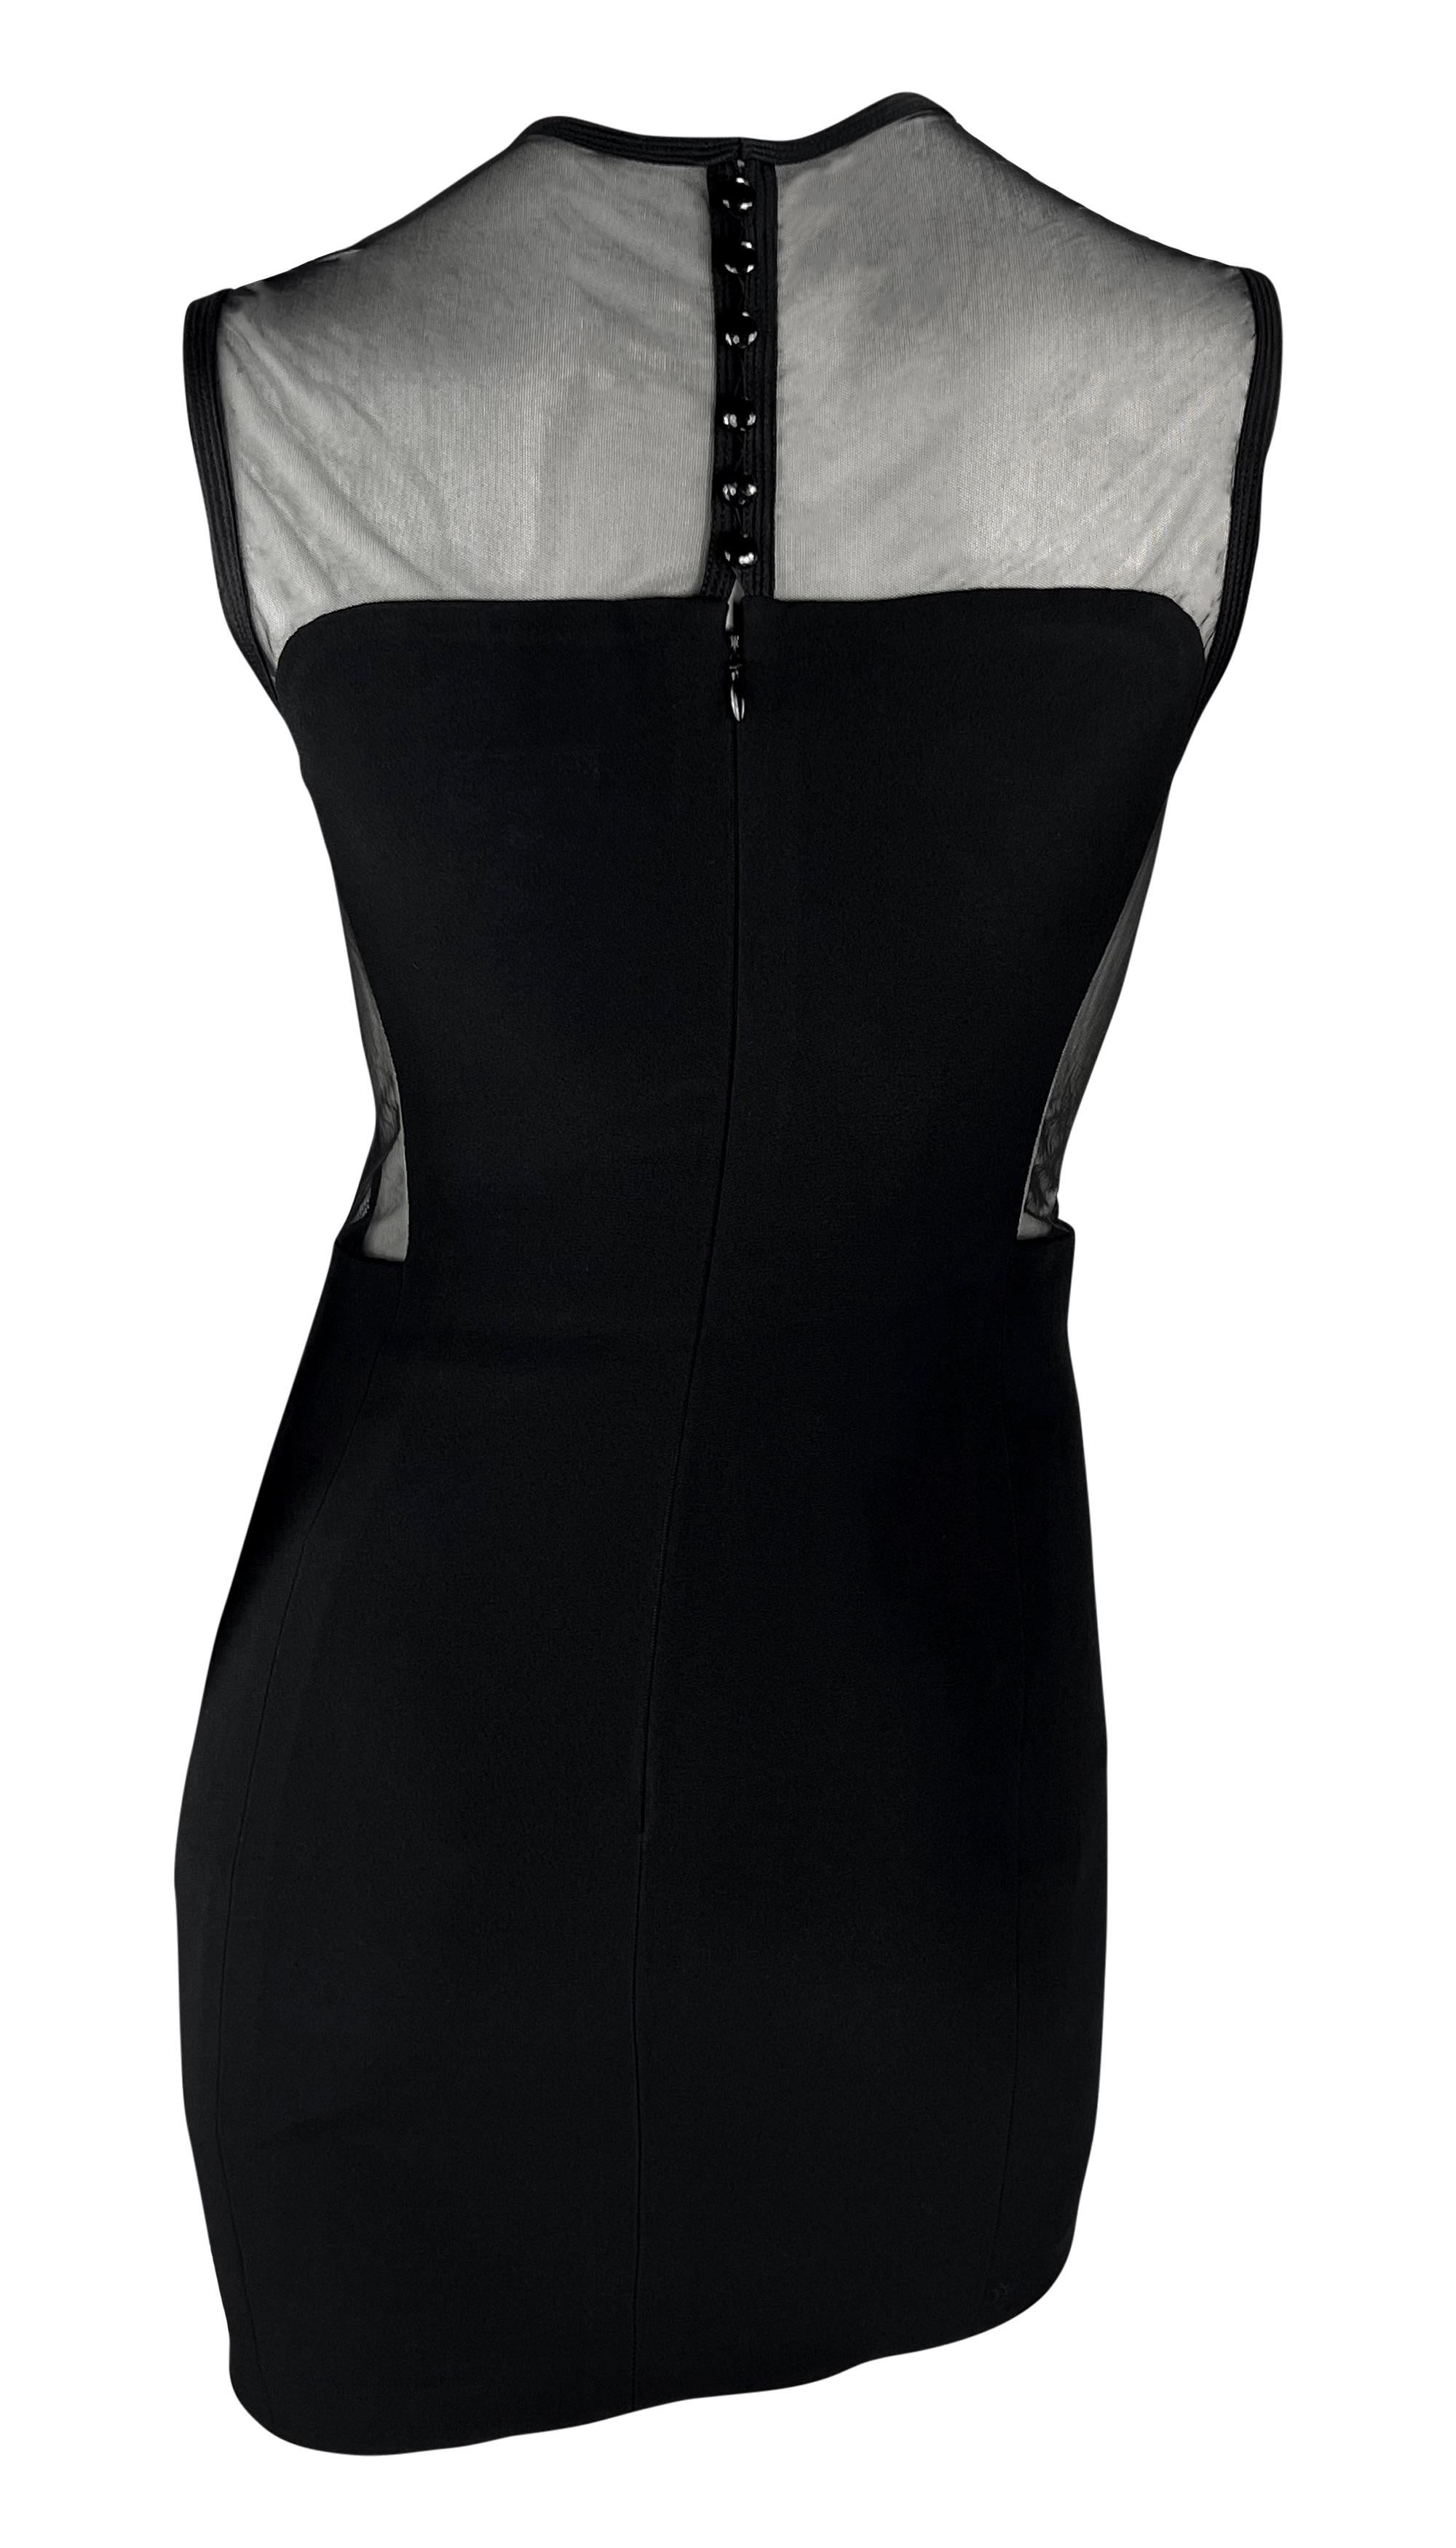 S/S 1996 Gianni Versace Black Sheer Panel Sleeveless Mesh Bodycon Dress For Sale 2